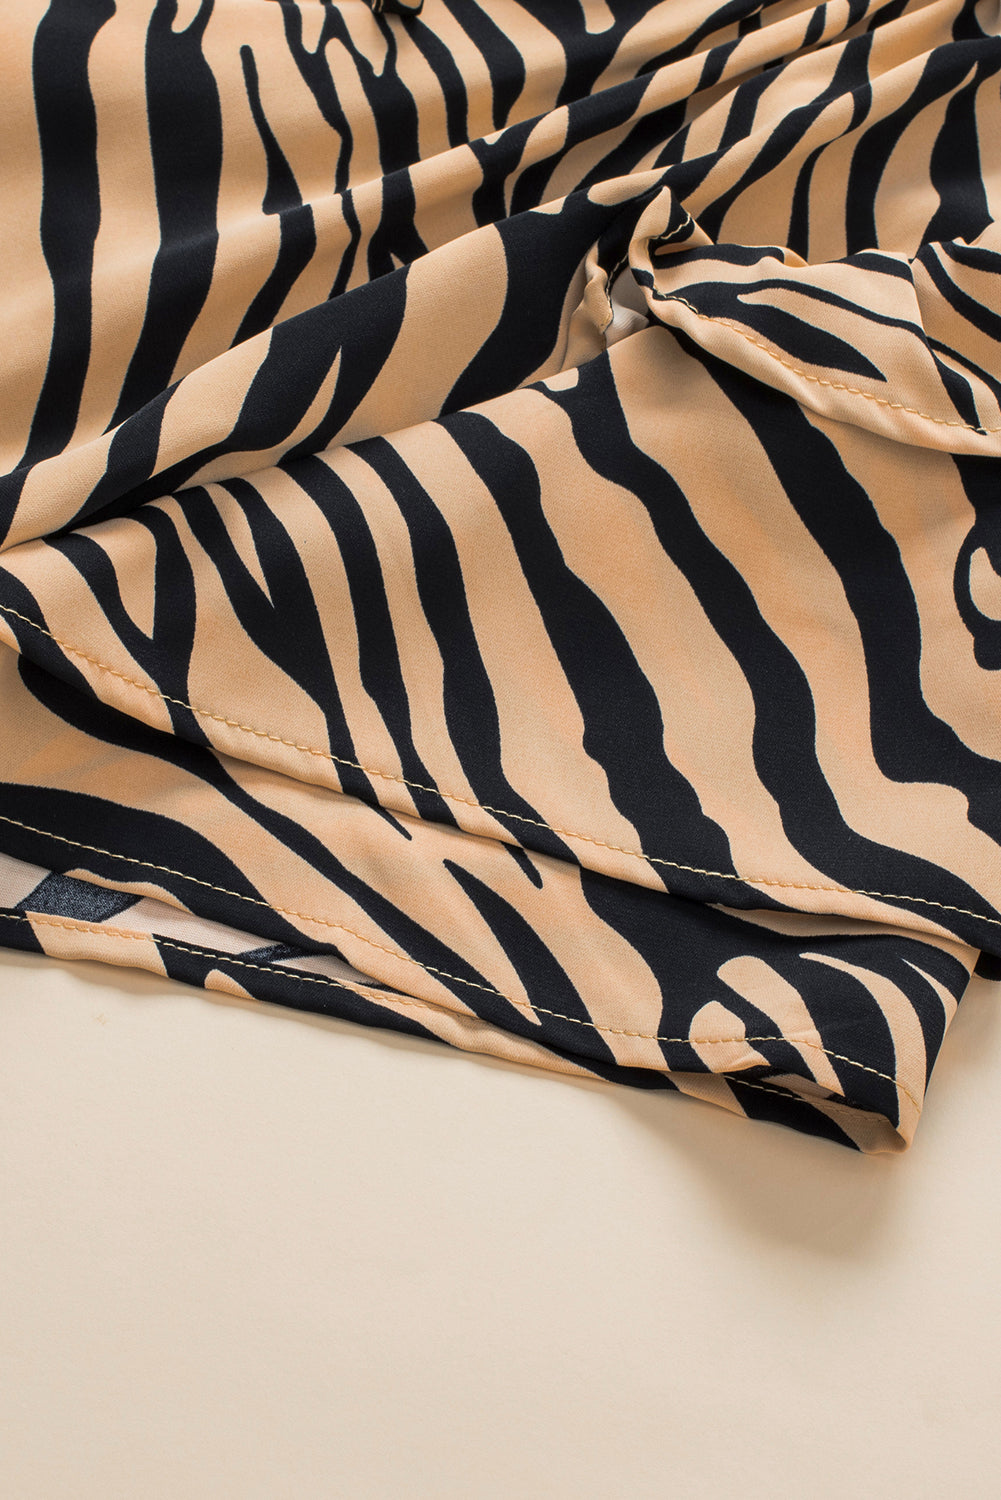 Blue Zone Planet |  Brown Zebra Print Ruffled Tiered Dress Blue Zone Planet